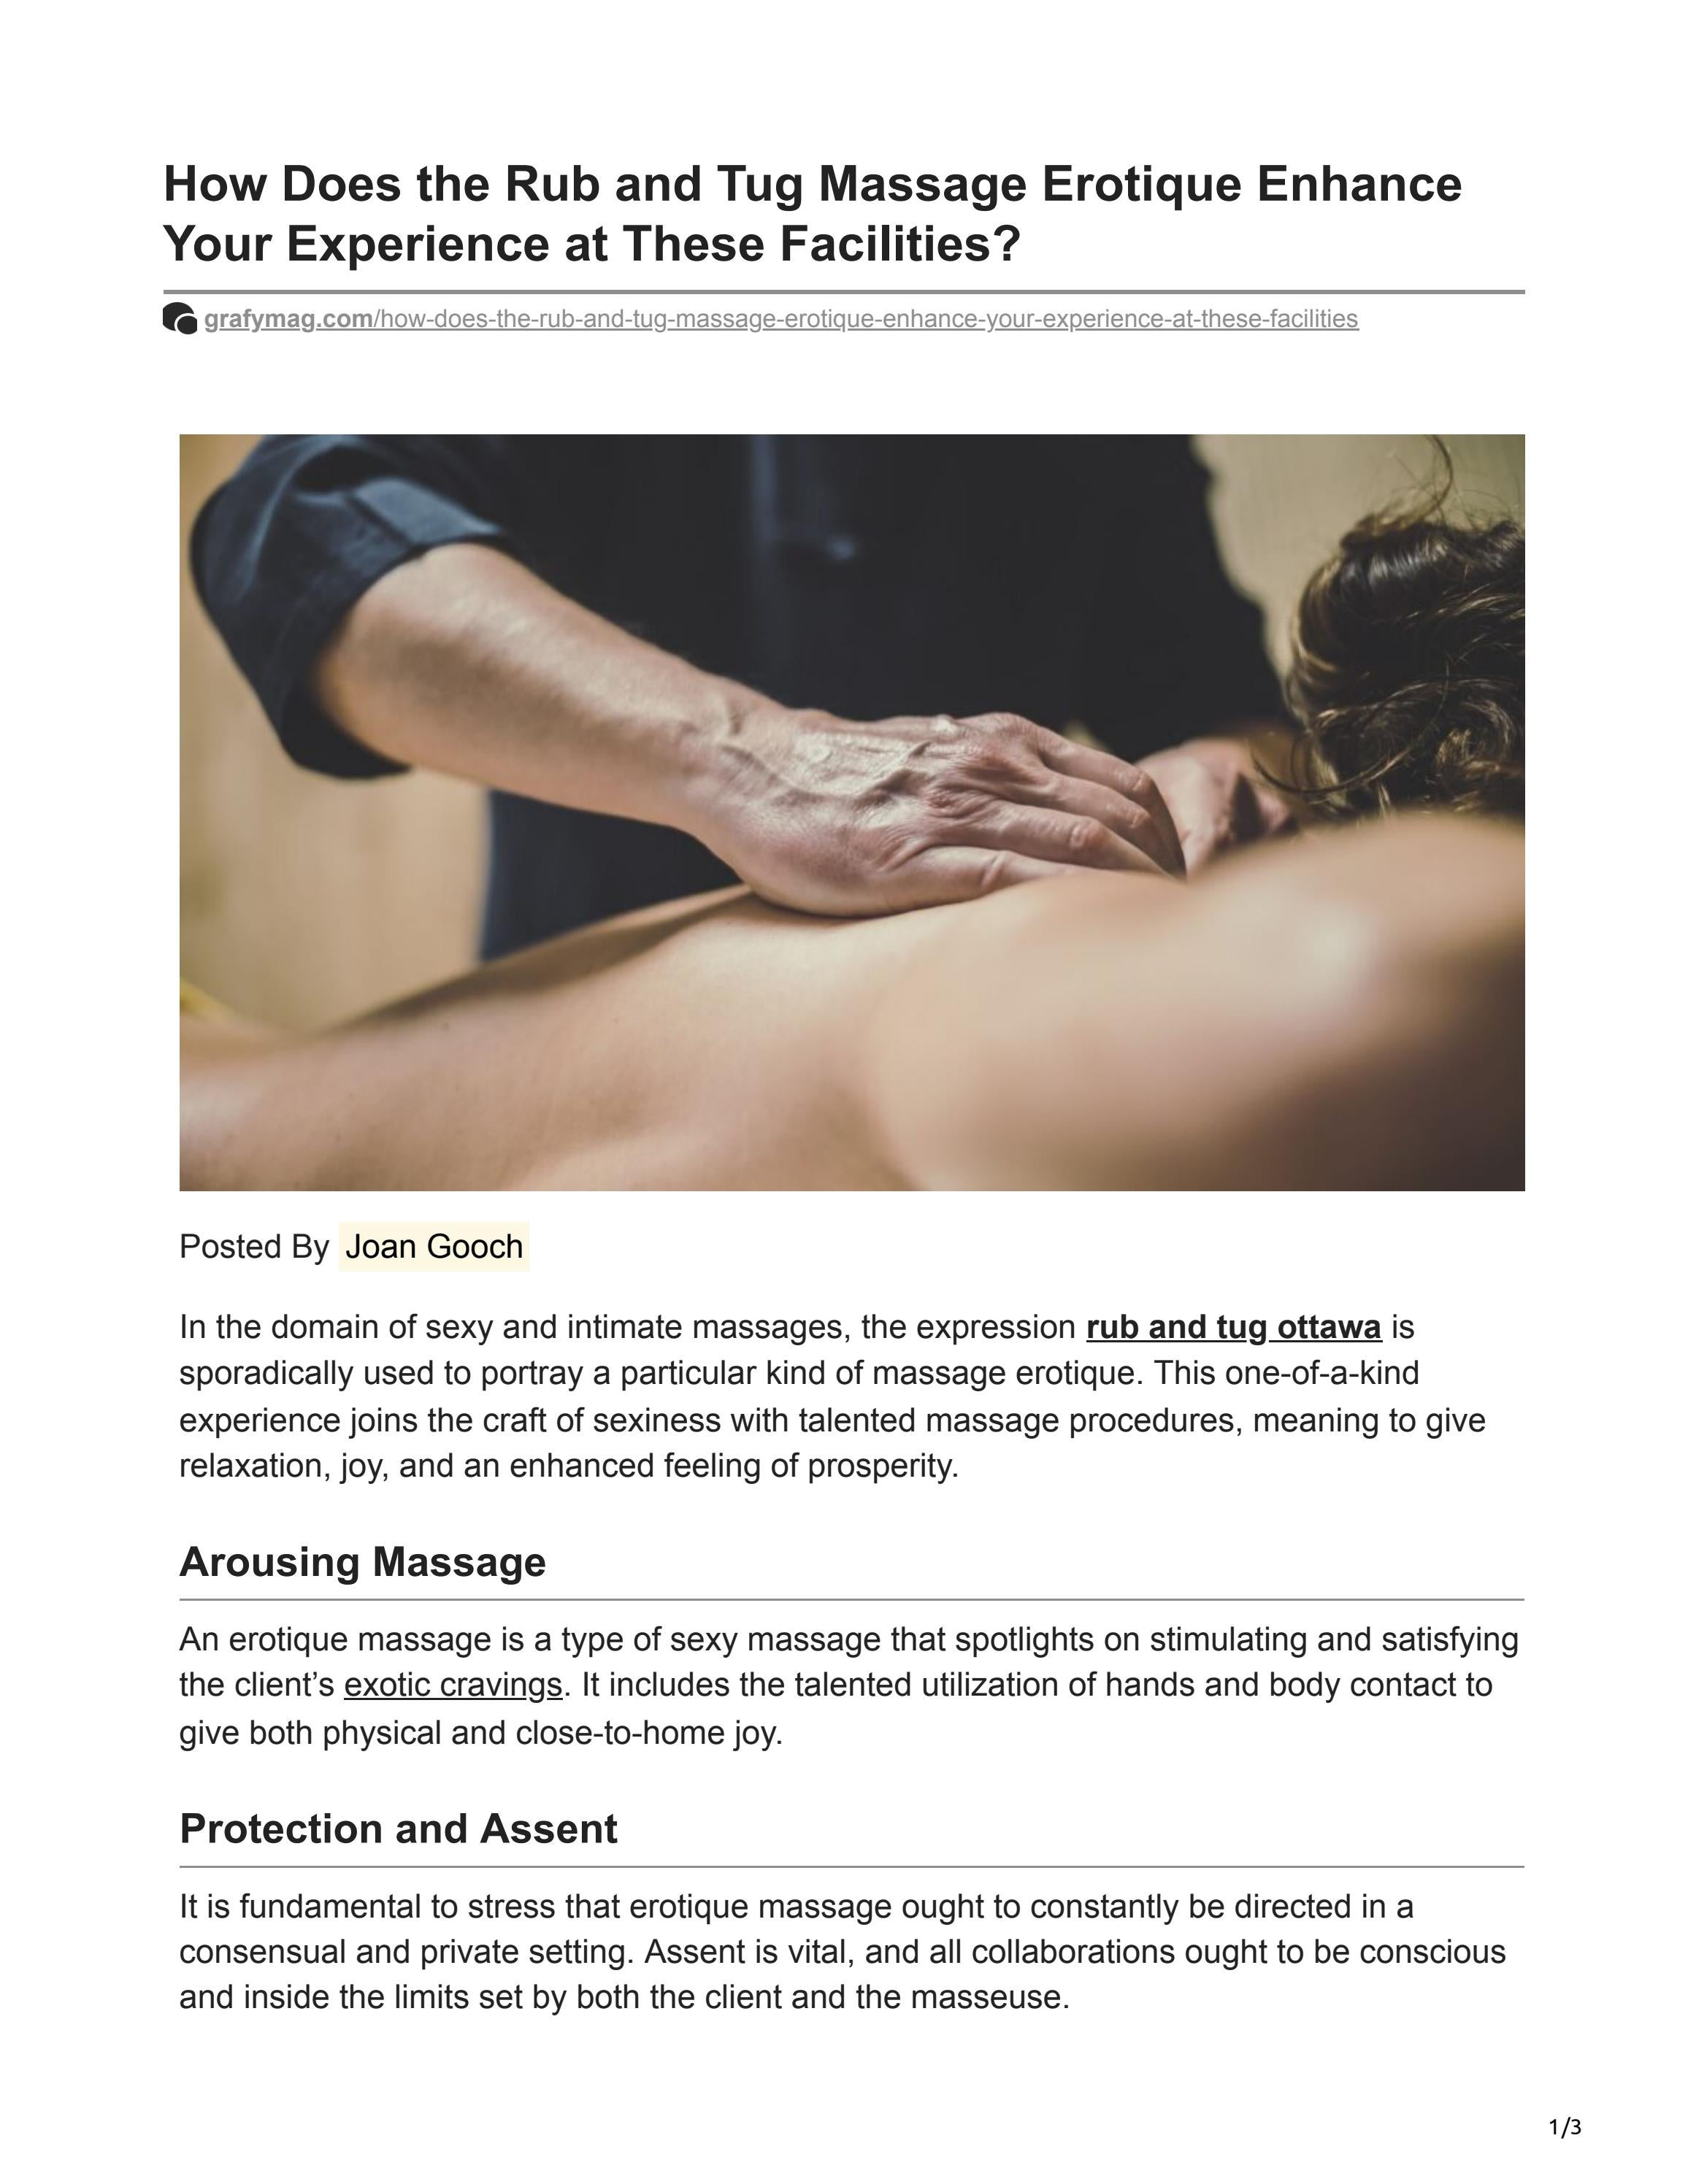 bud mcdonald recommends massage irotique pic